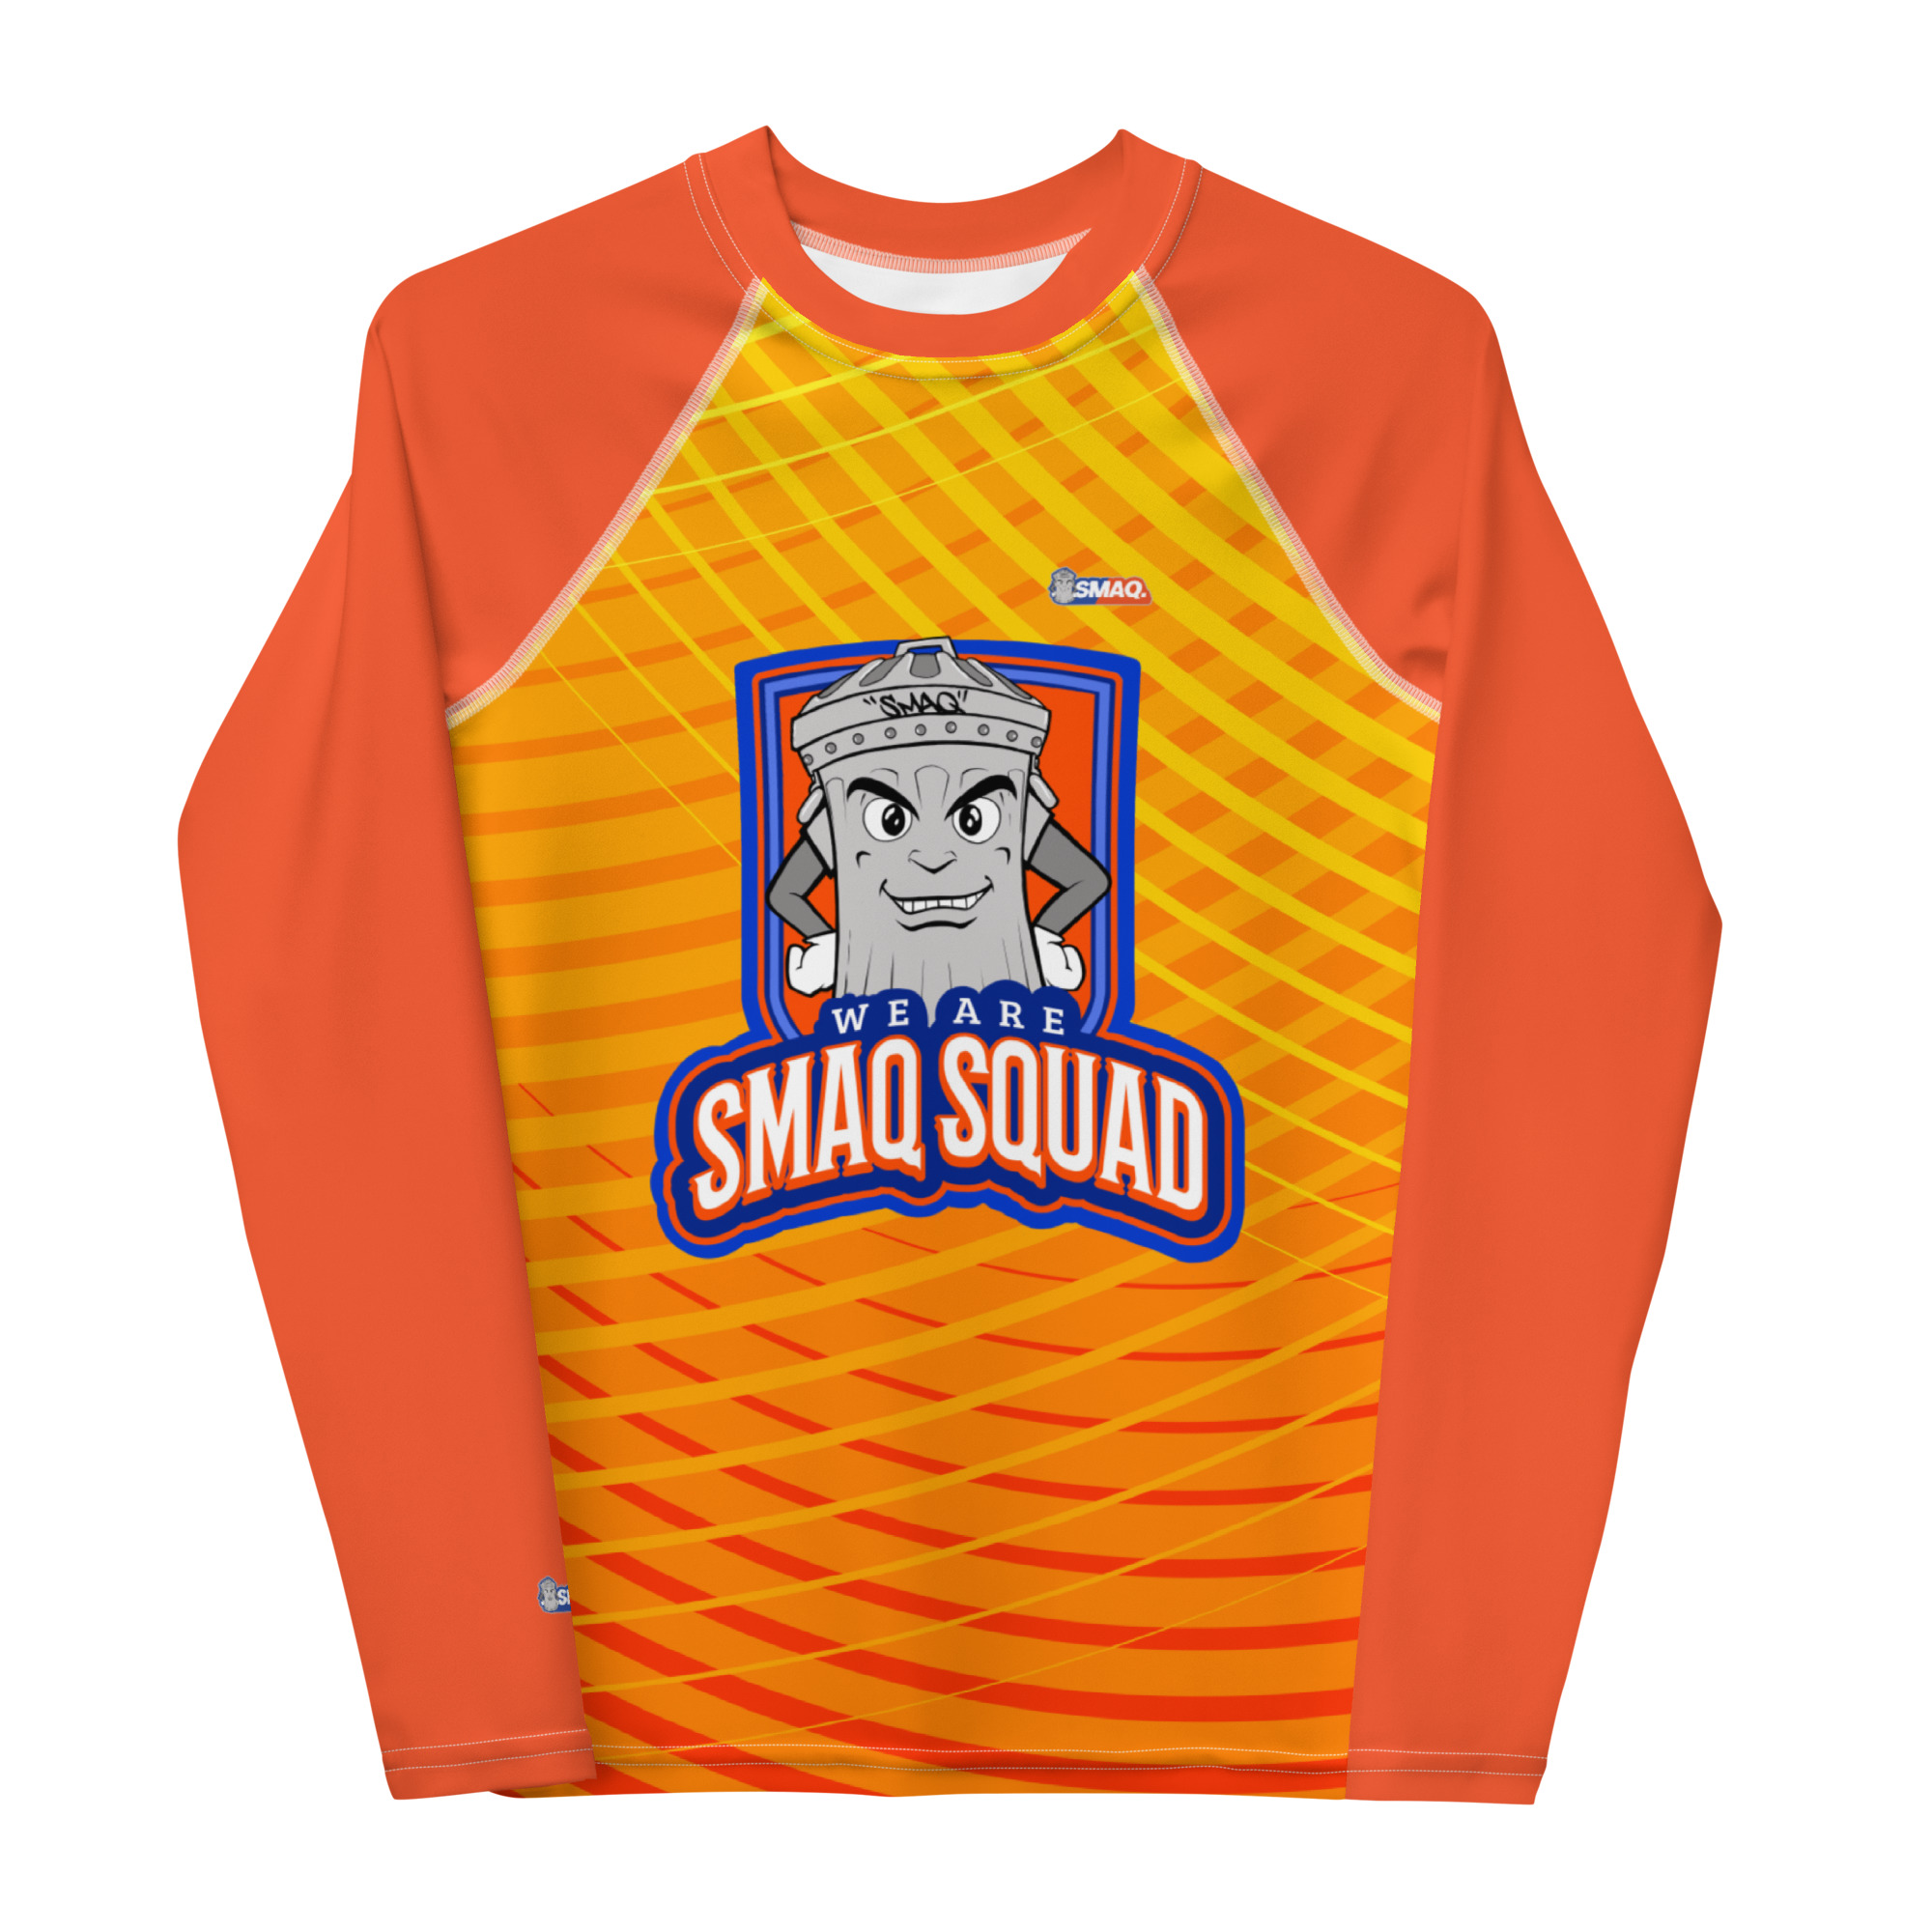 SMAQ SQUAD Orange Youth Rash Guard